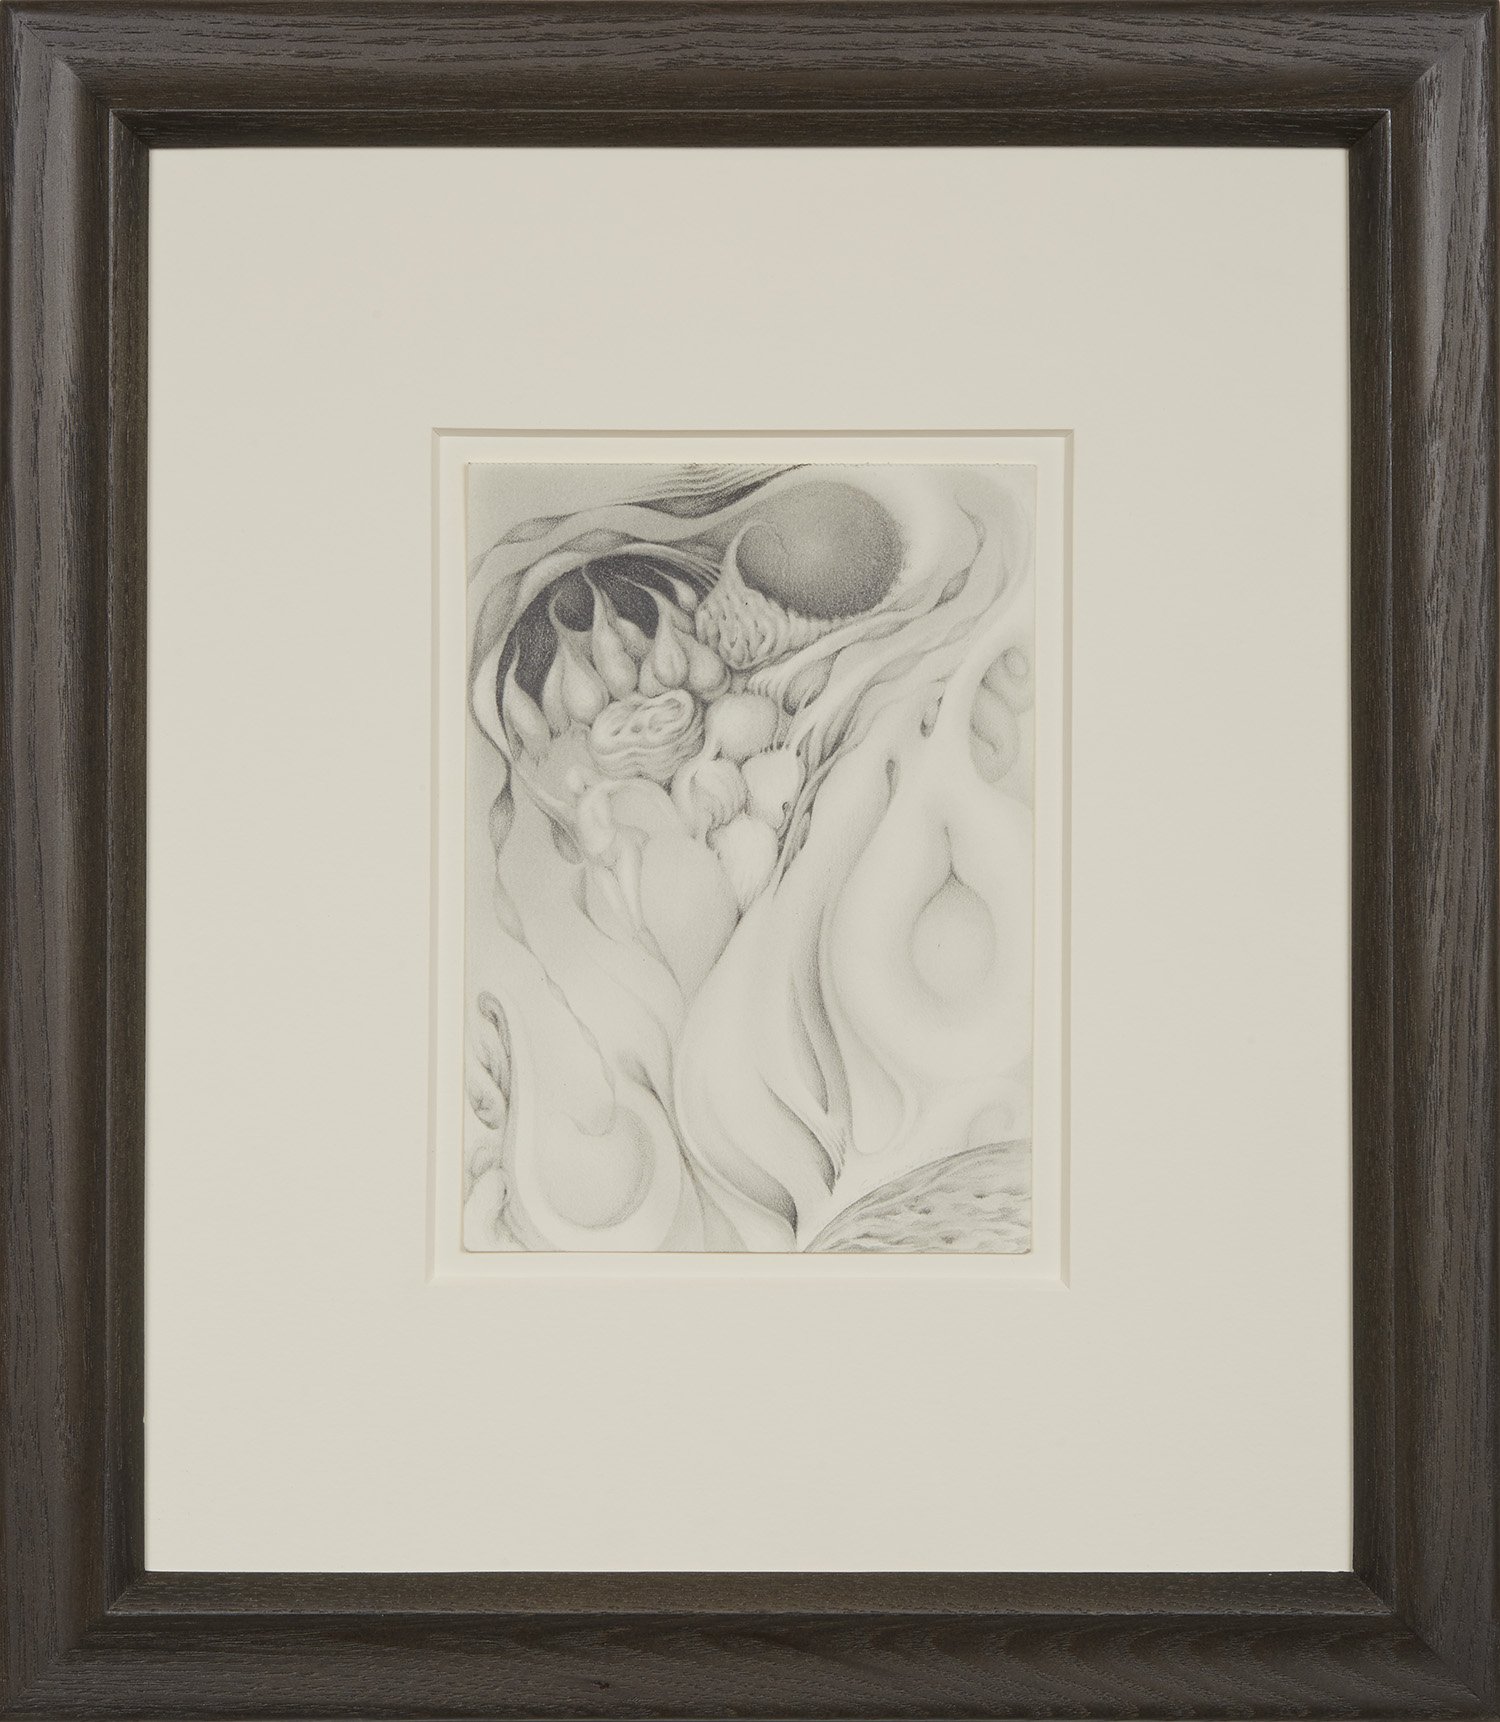   Frances Smokowski  Tabernaculus  , 2016 Graphite on rag paper 15.8 x 13.3 inches 40.1 x 33.8 cm FSm 3 